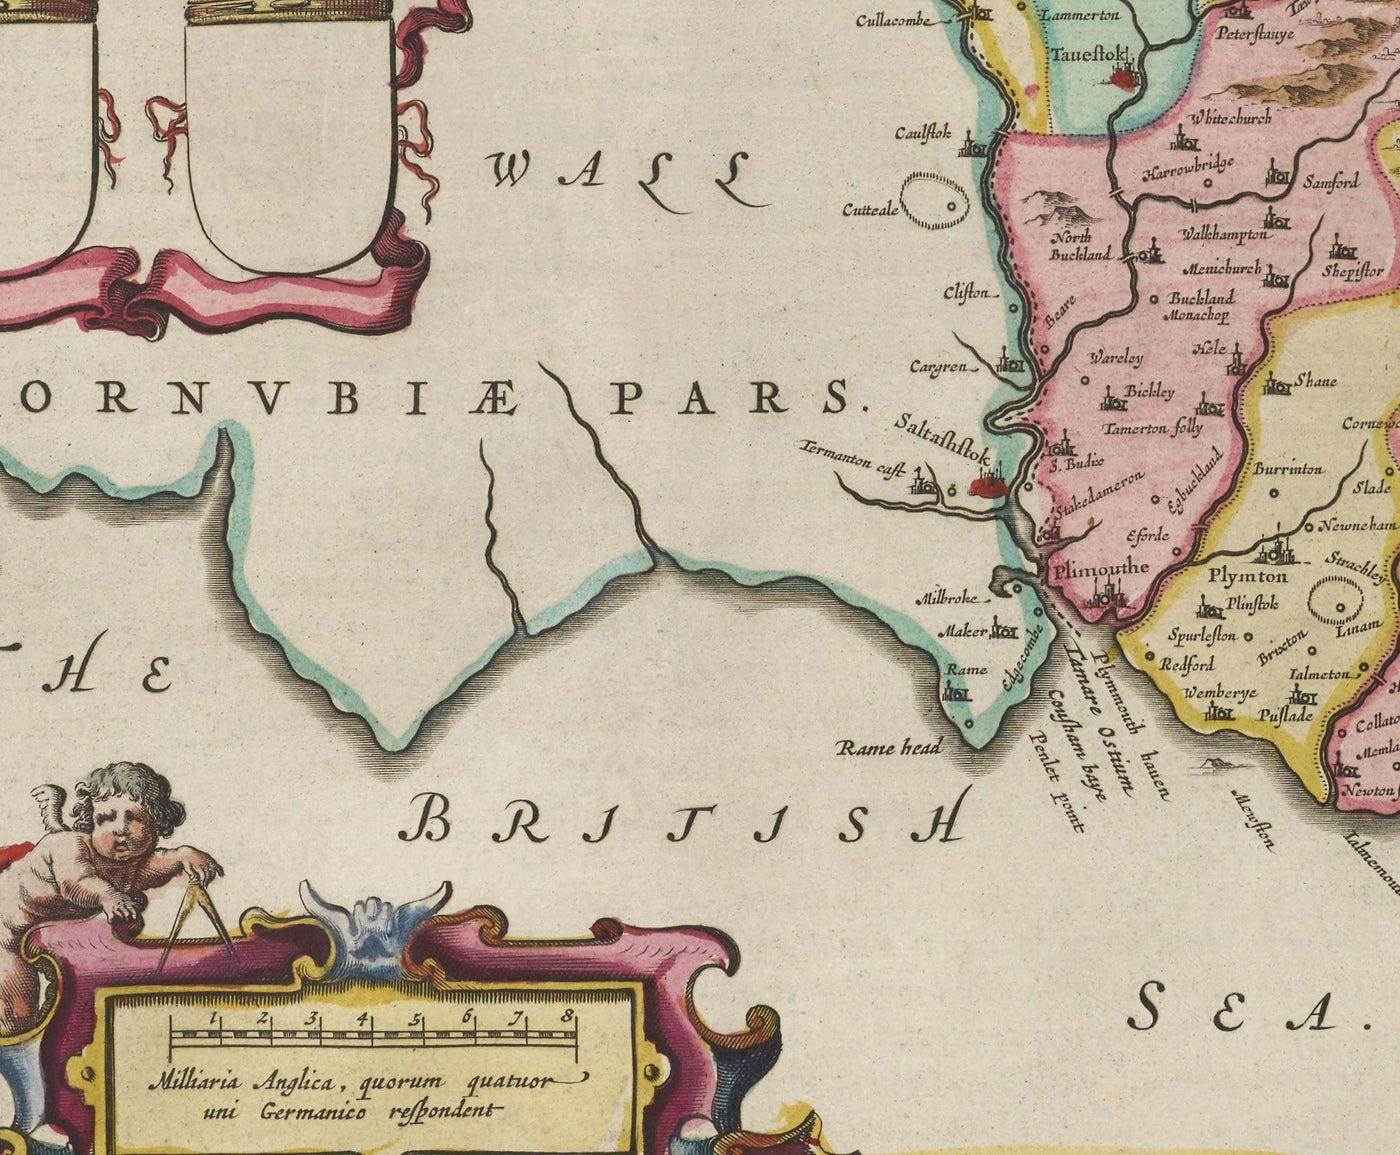 Viejo mapa de Devon en 1665 por Joan Blaeu - Plymouth, Exeter, Torquay, Paignton, Exmouth, Barnstaple, País Oeste